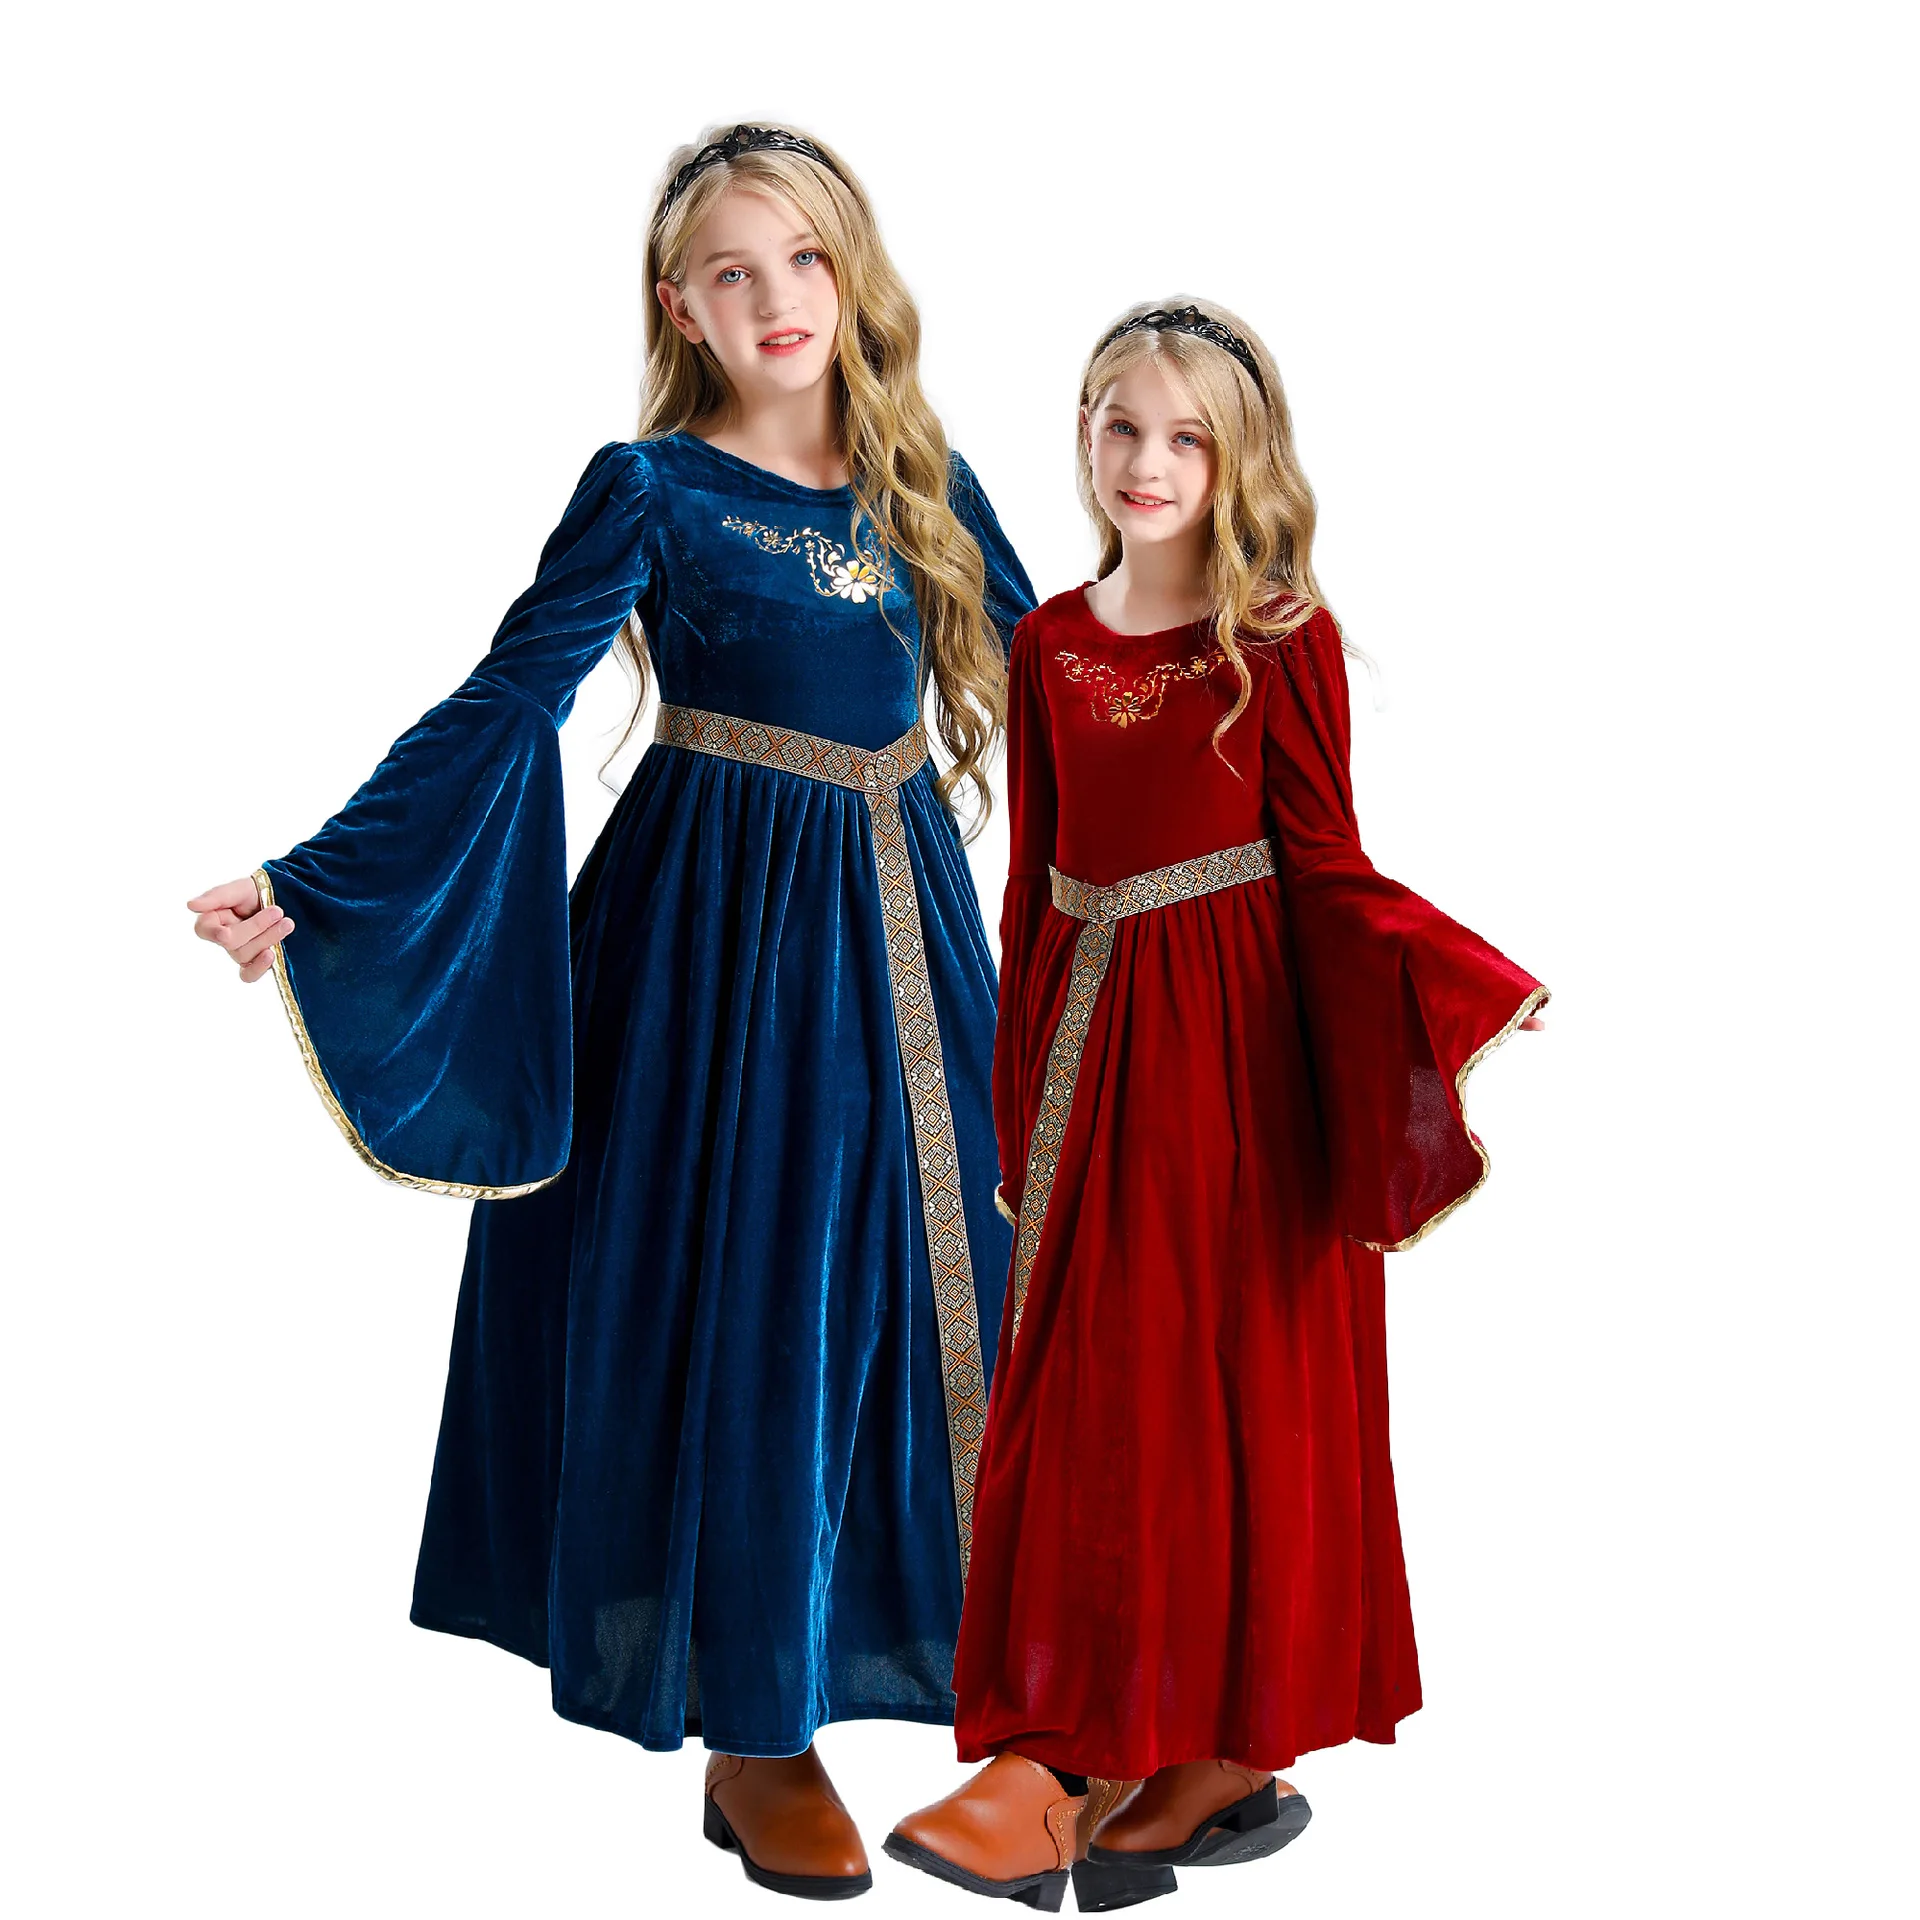 Children's costumes medieval  princess costumes girls' retro dresses girls' stage drama costumes